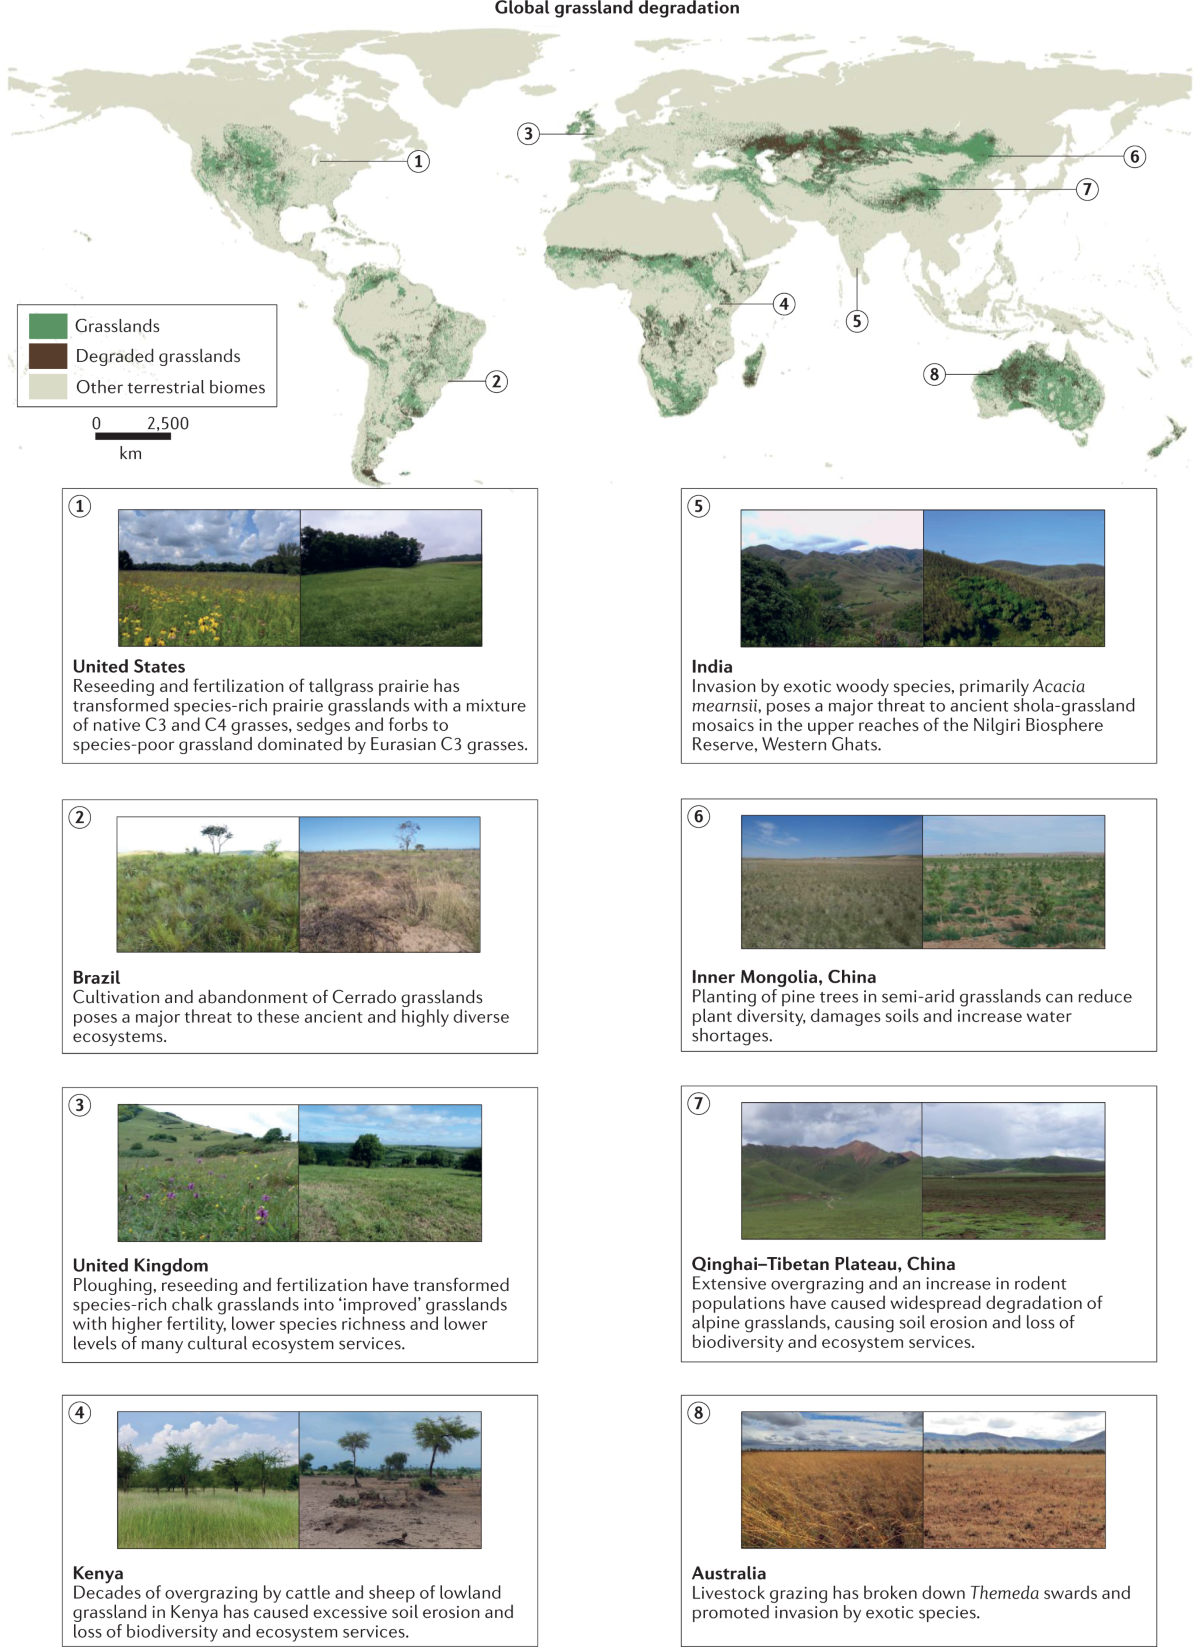 Combatting global grassland degradation